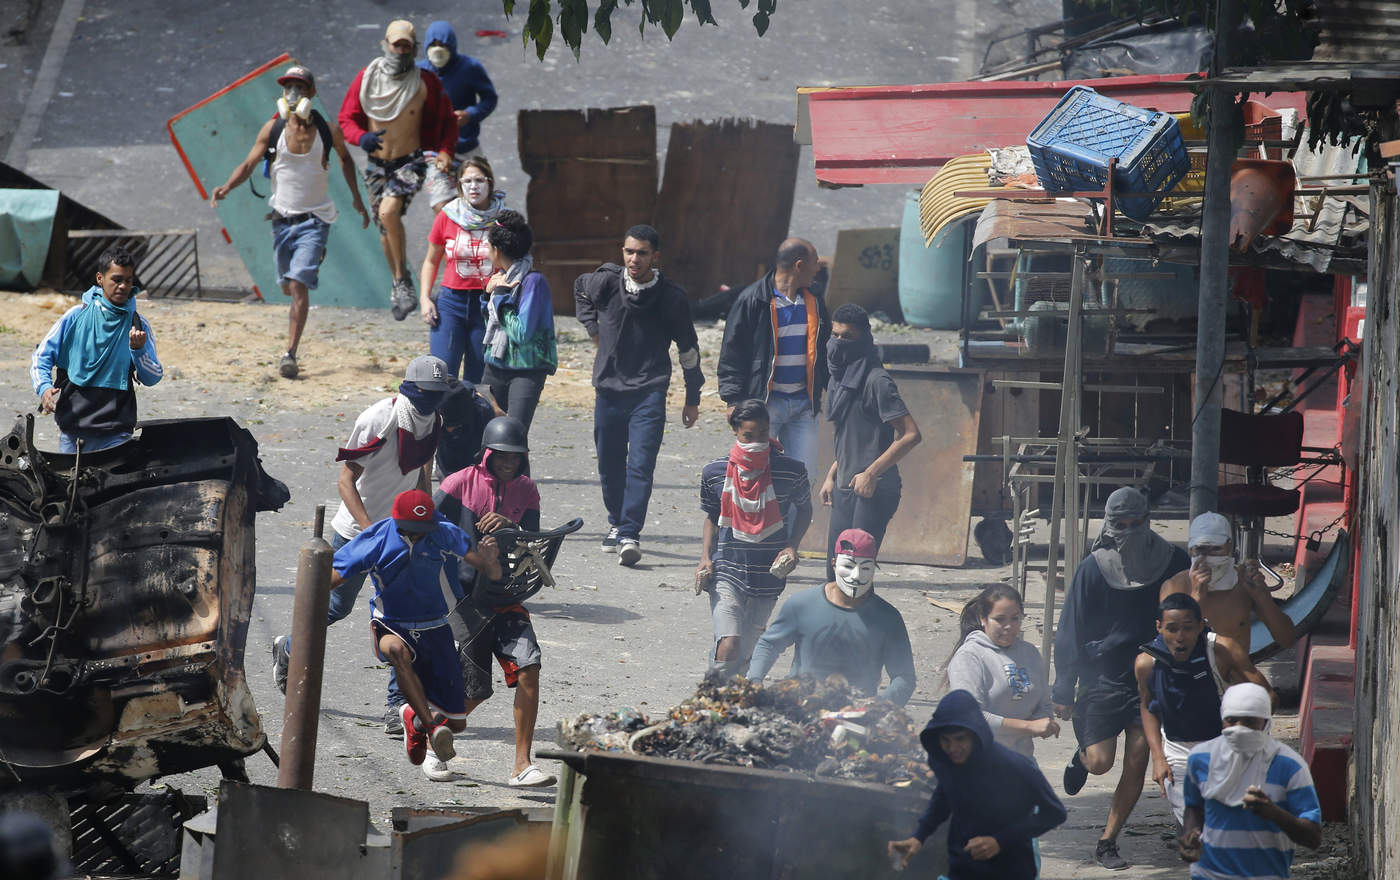 Embajada mexicana aconseja 'extremar precauciones' en Venezuela